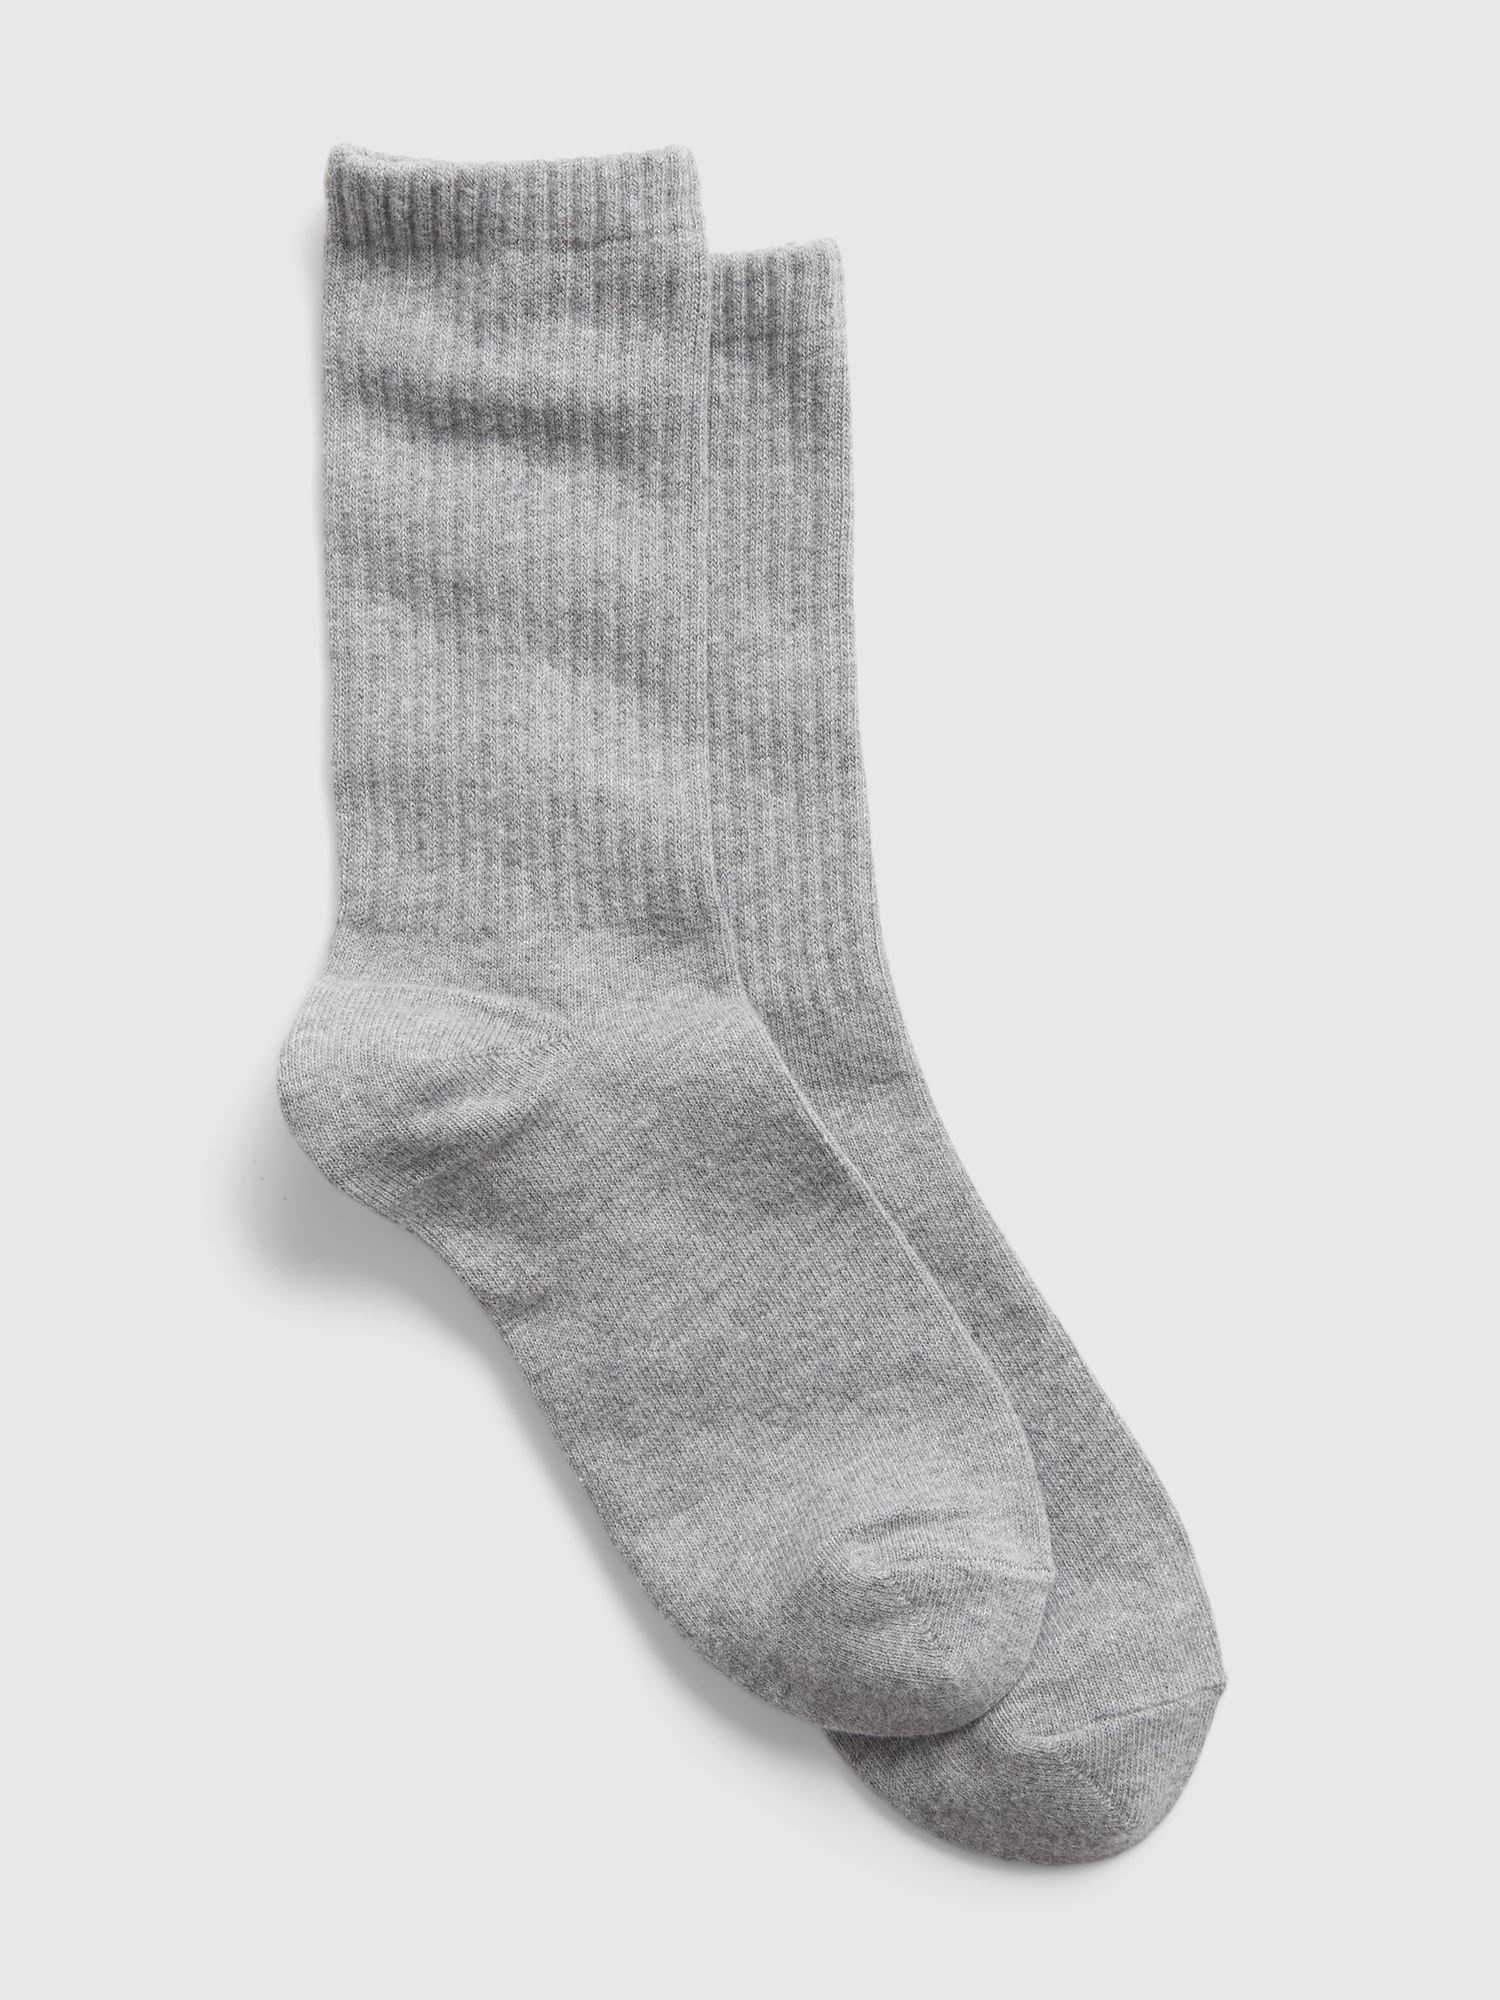 Fashion Polyester Blend Solid Socks, Men's 6pairs Versatile Dot Warm Crew Socks,for Winter,Temu